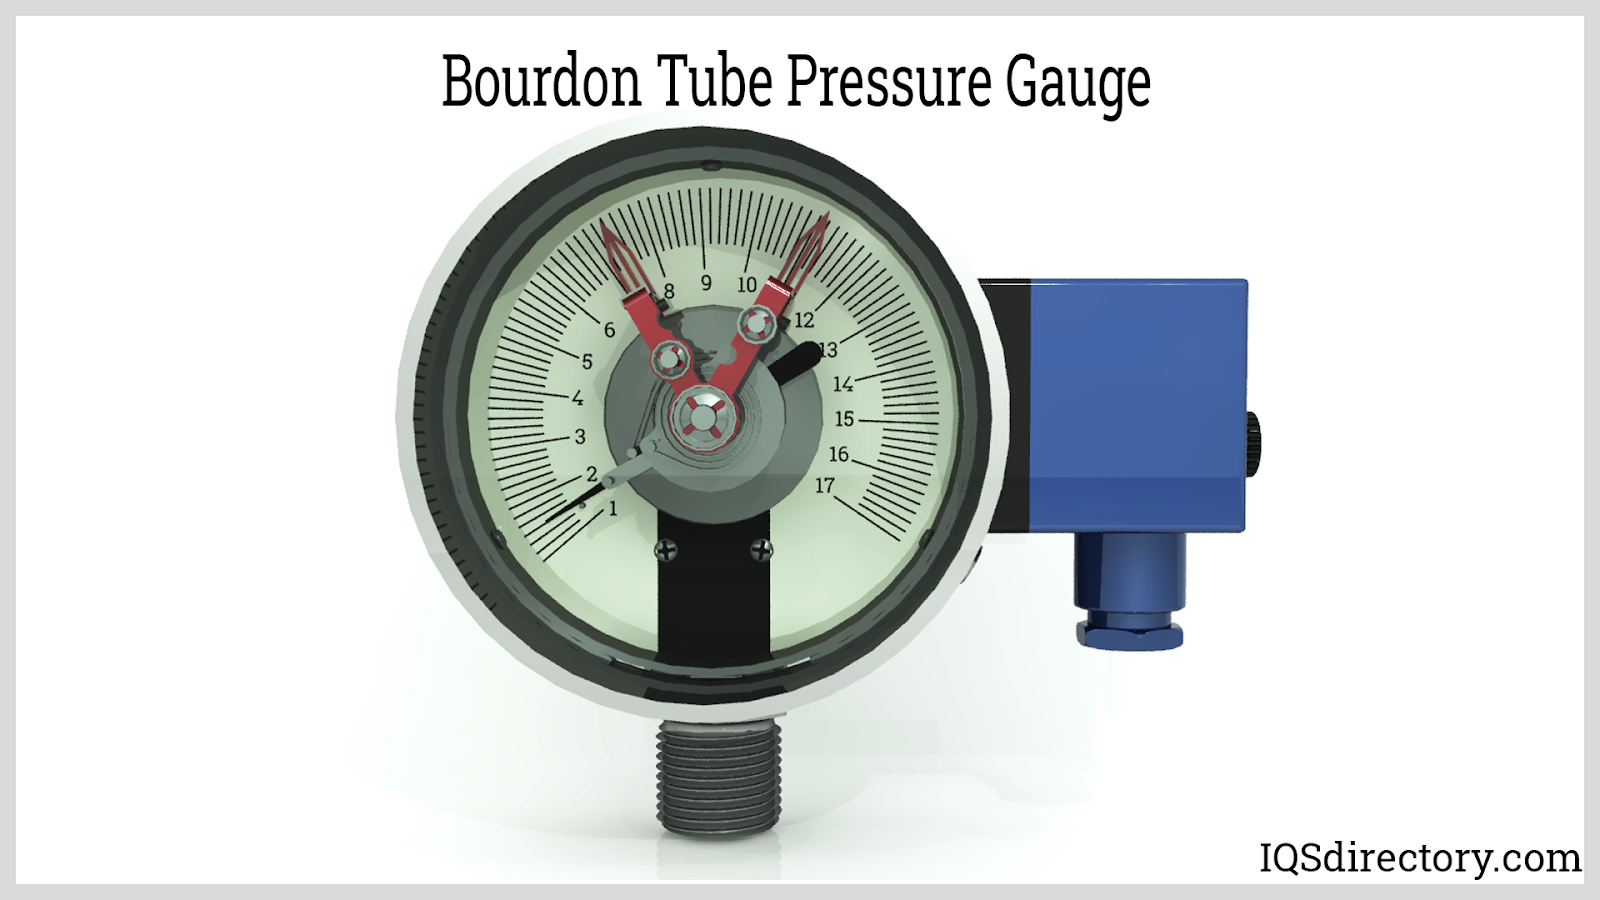 Bourdon Tube Pressure Gauge